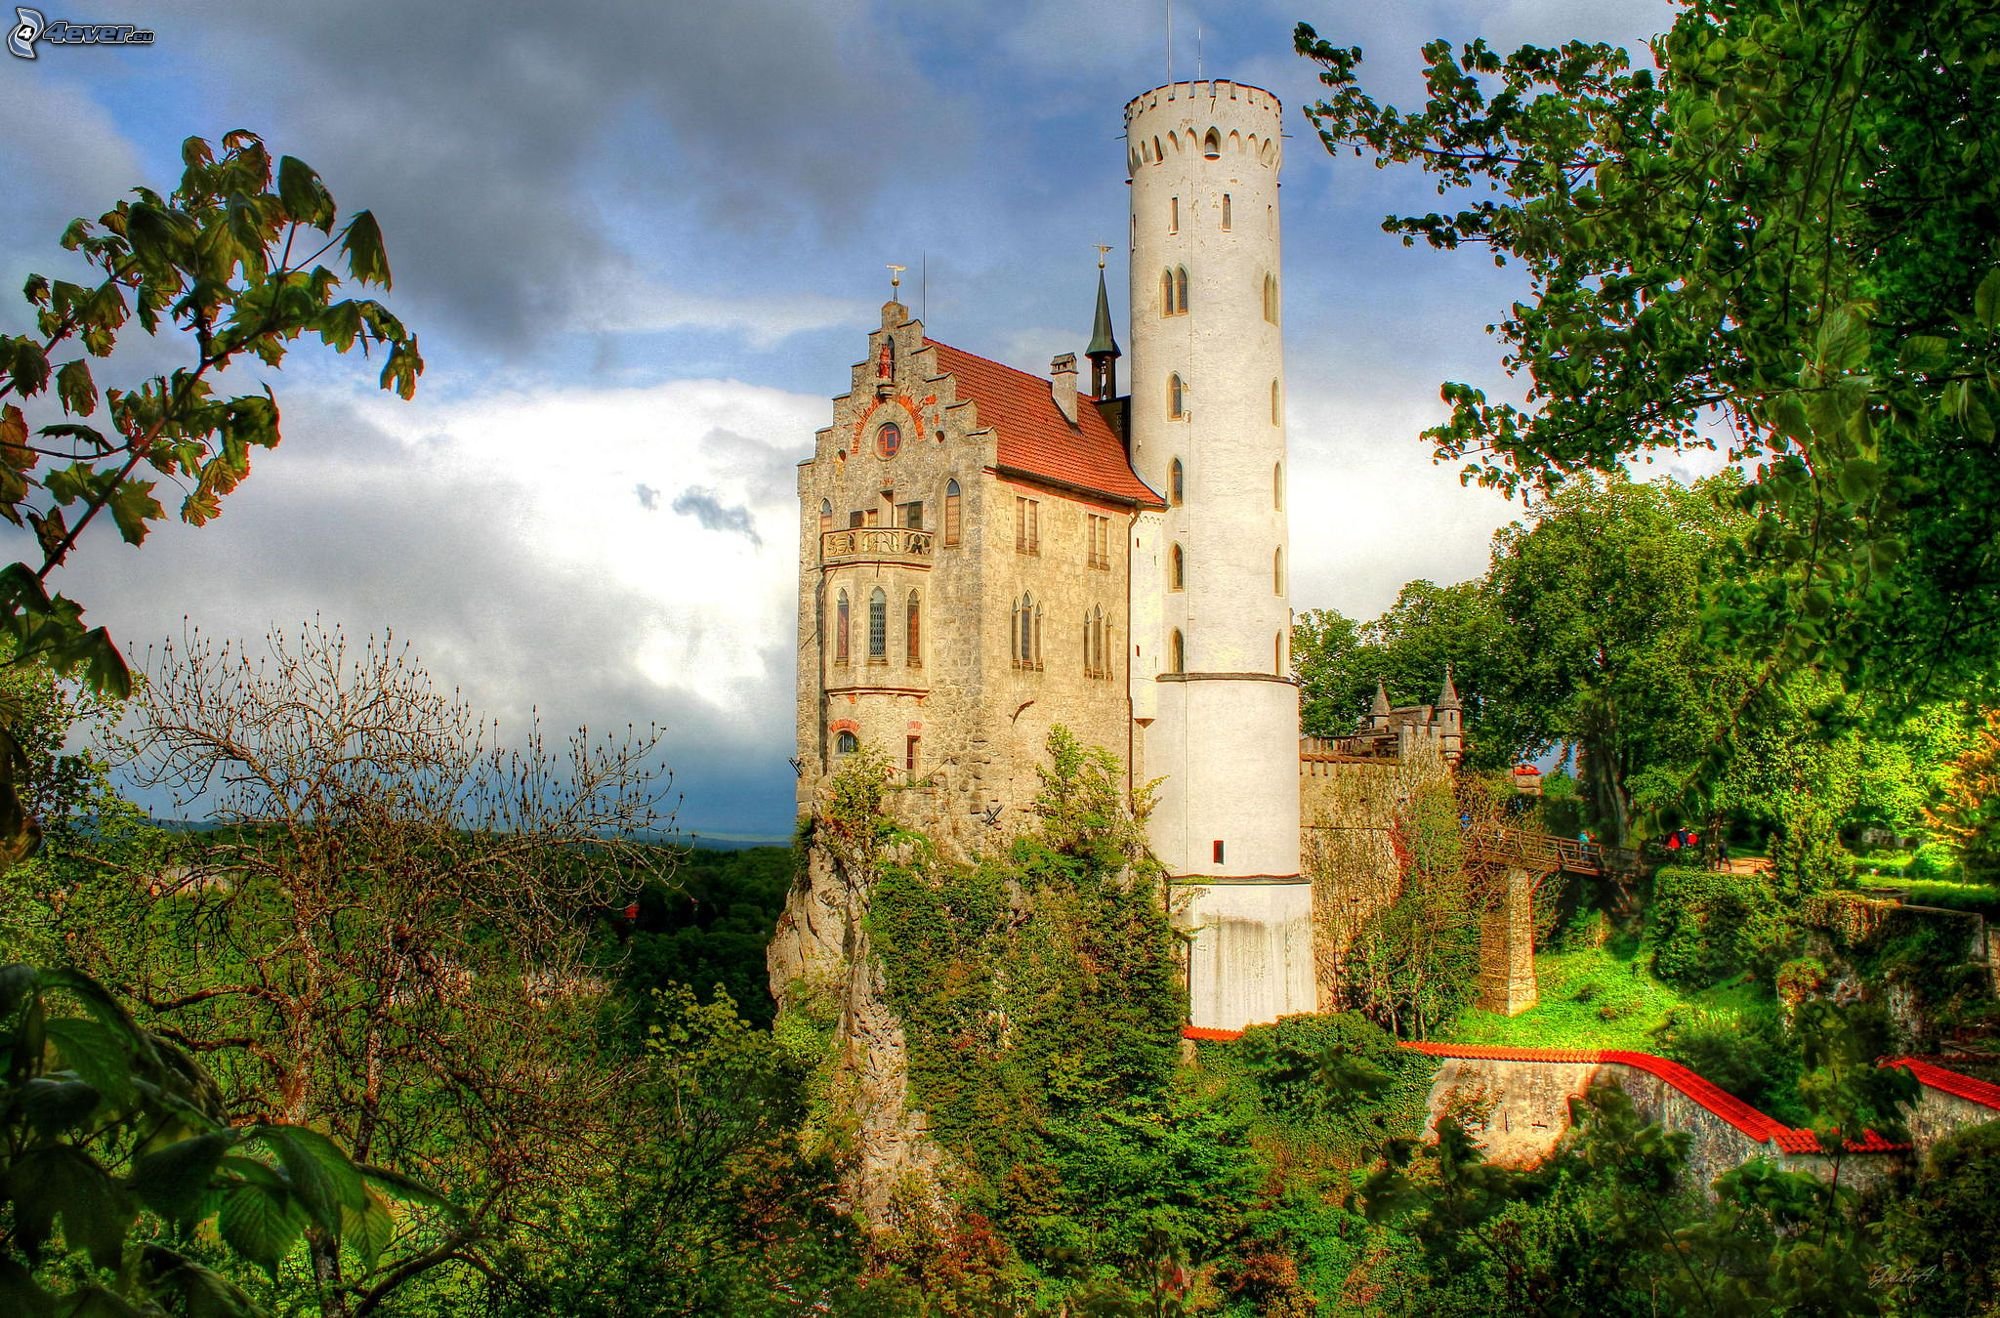 Замок лихтенштейн, германия — обзор